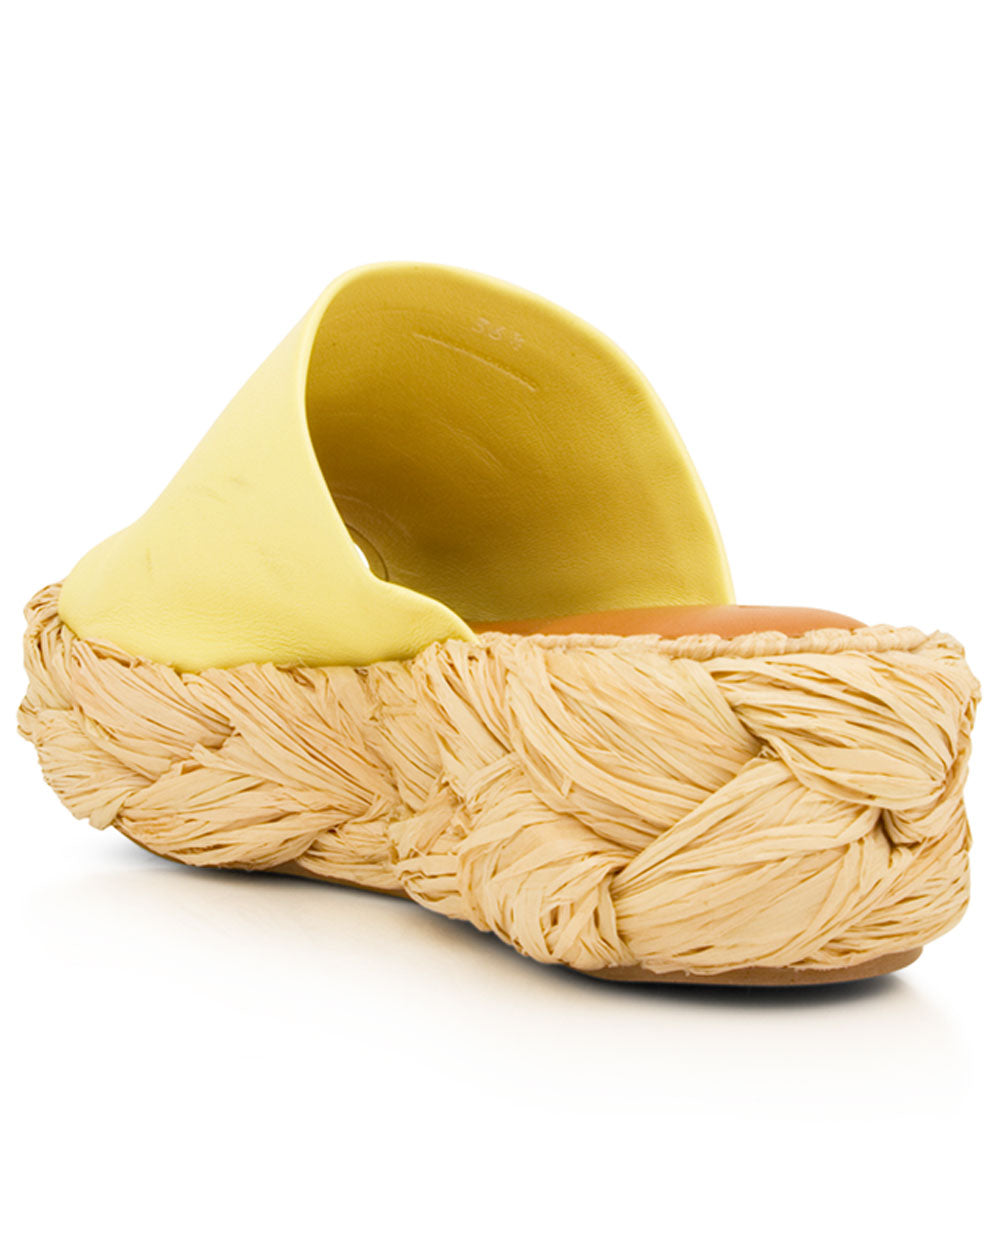 Axel Platform Espadrille Sandal in Lemon